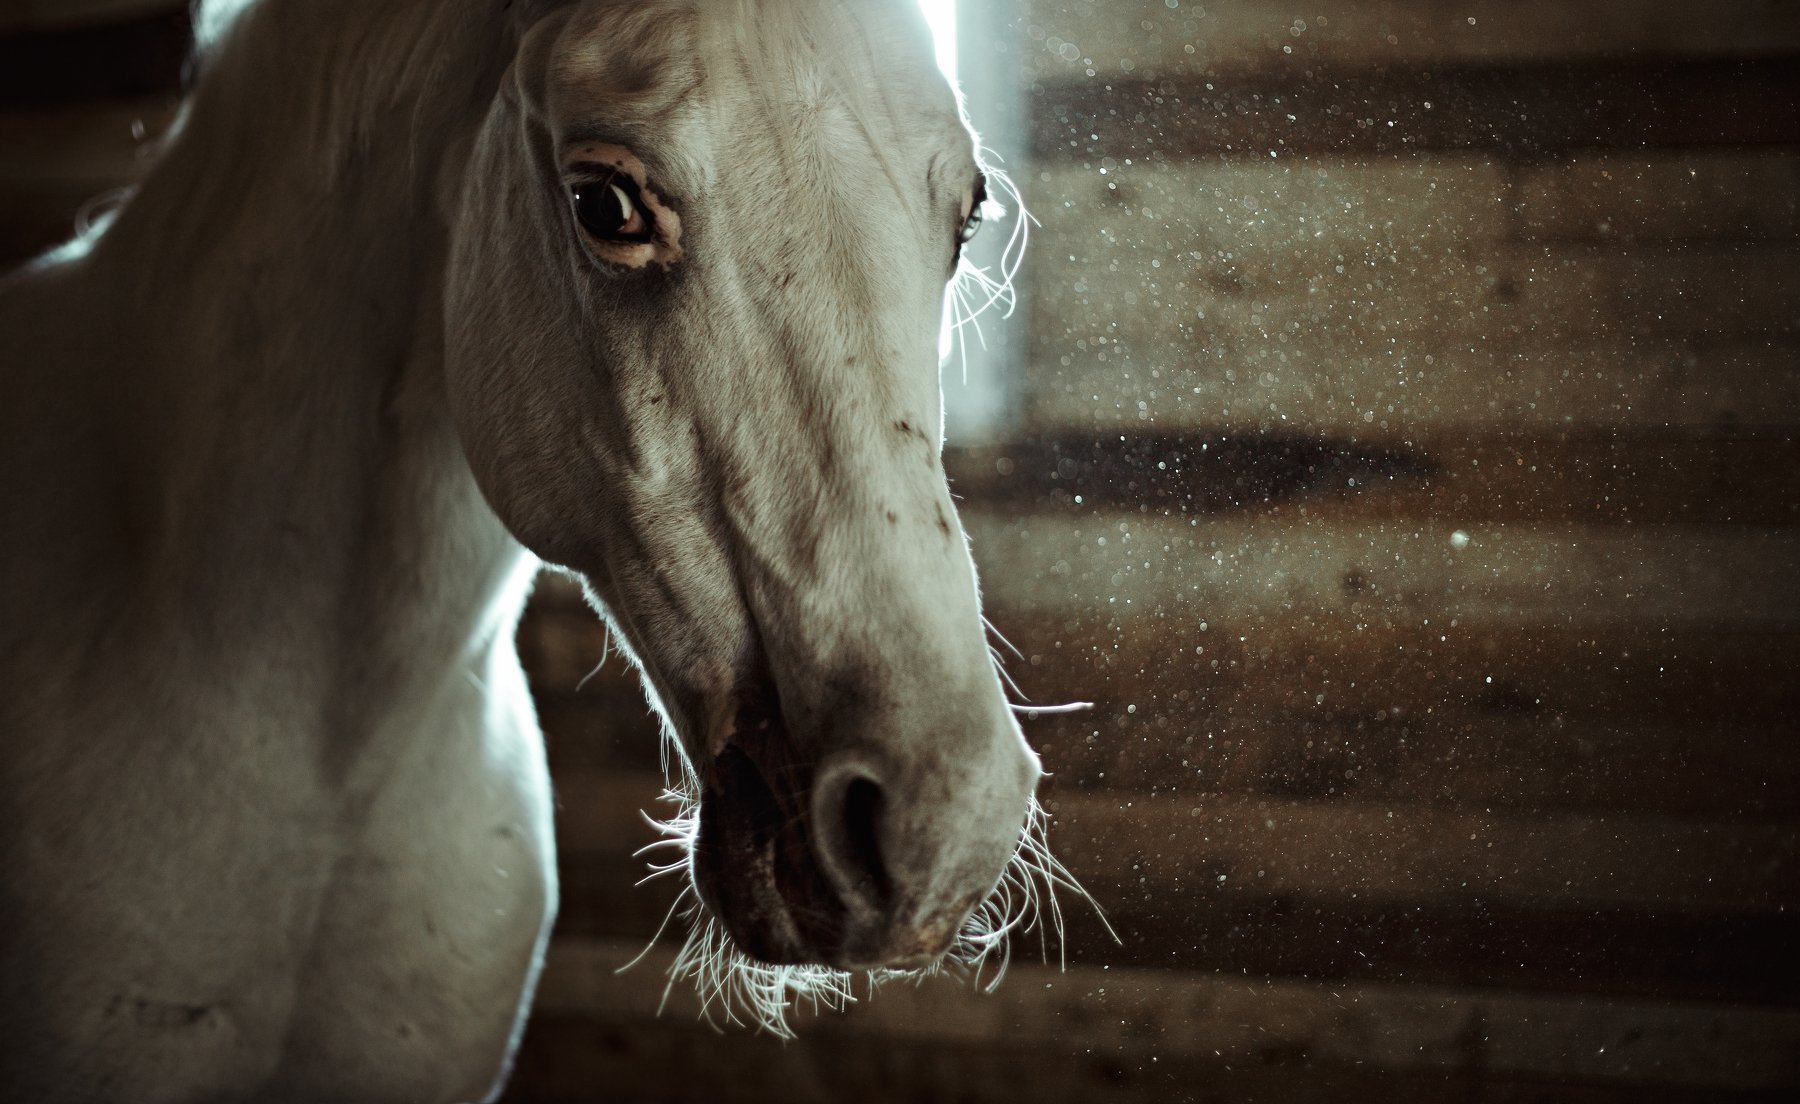 horses, stables for horses, steed, hoss, конь, лошадь, конюшня, , Маховицкая Кристина